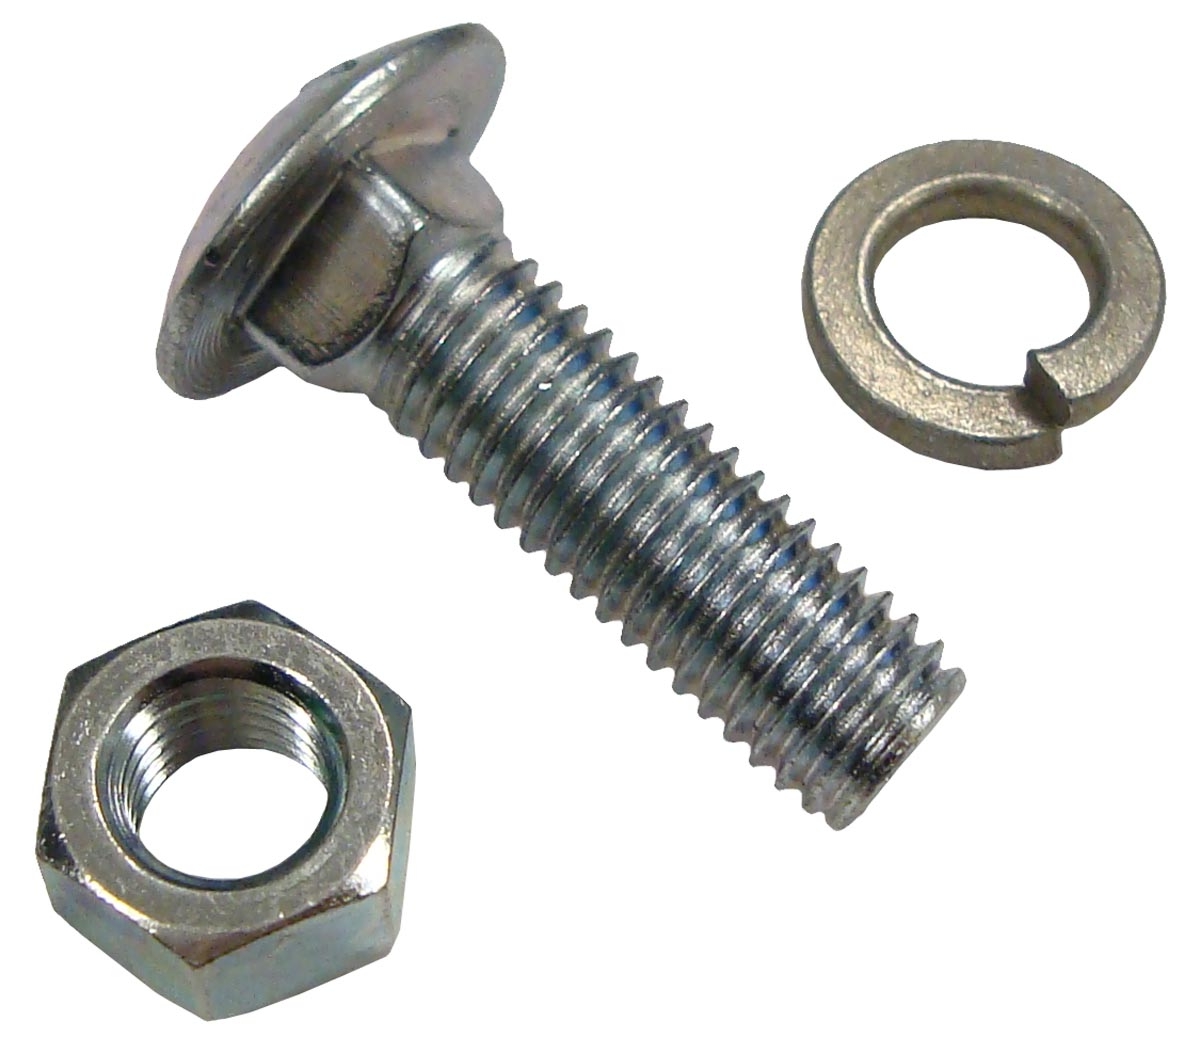 WASI stainless steel wood screws now with ETA | Fastener + Fixing Magazine